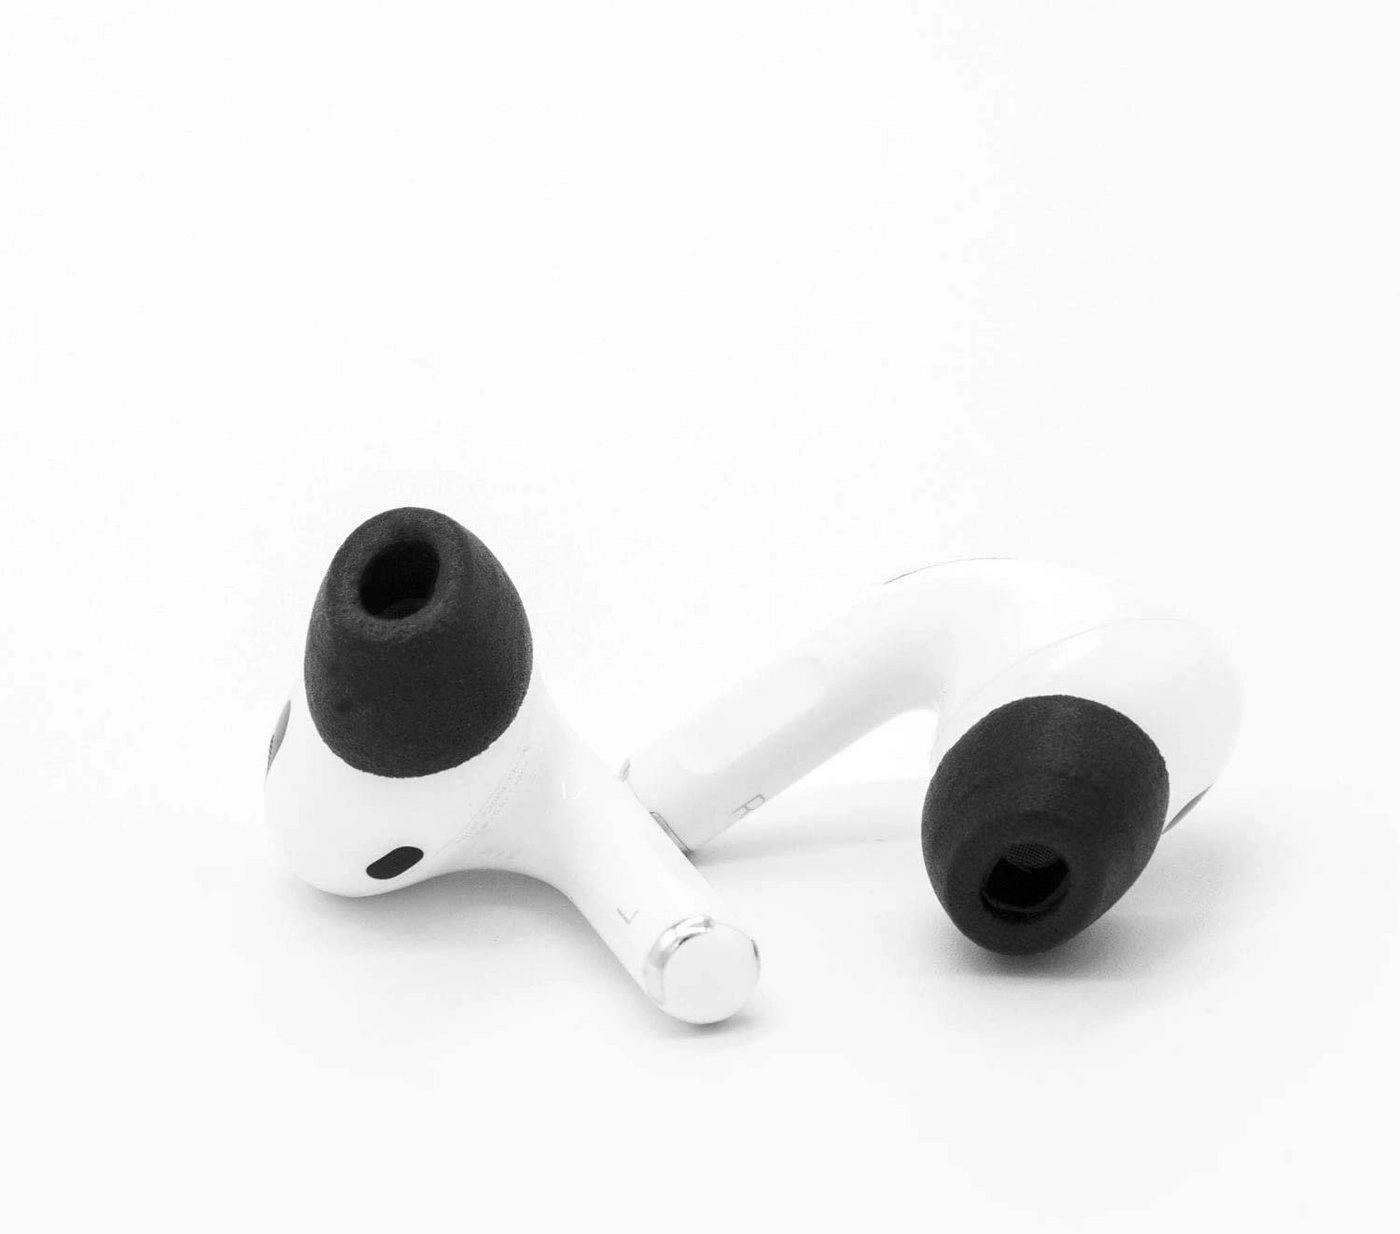 Comply »Comply 2.0 Ohrstöpsel für AirPods Pro Größe S« In-Ear-Kopfhörer